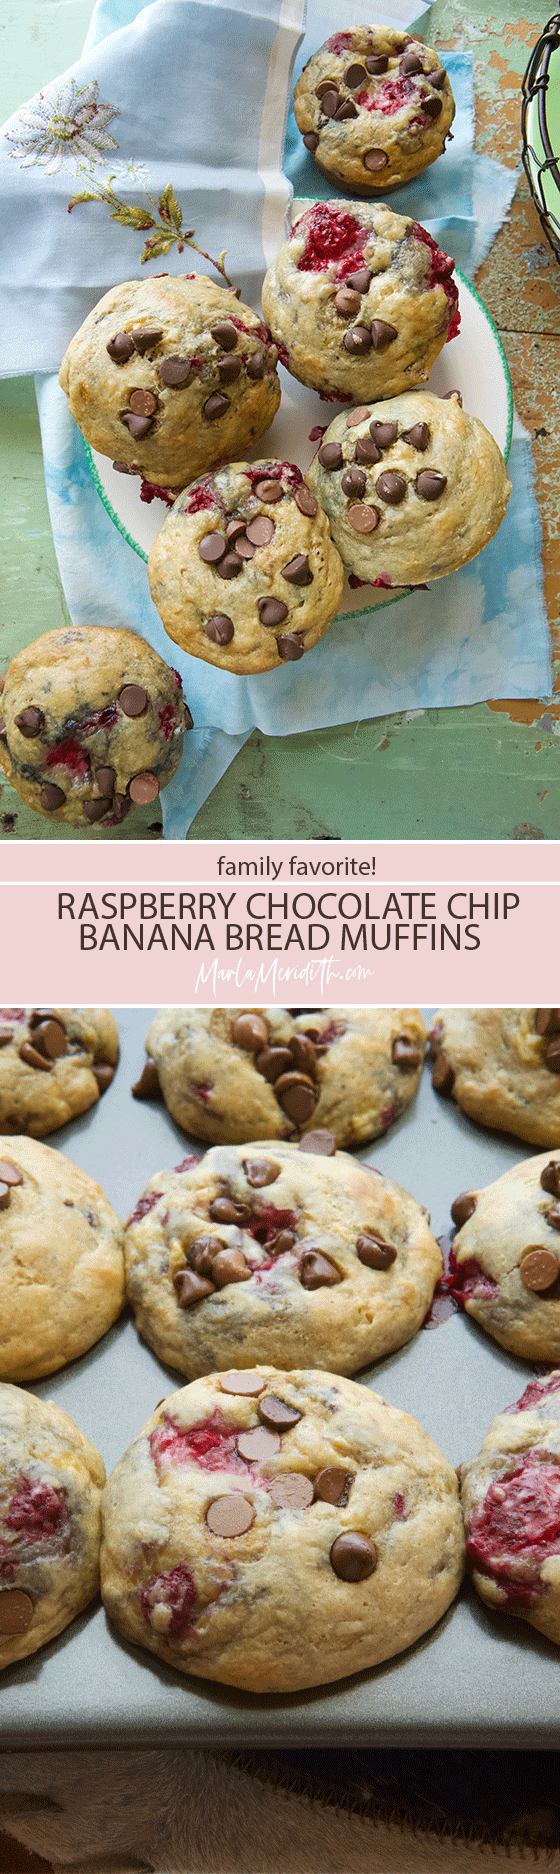 Raspberry Chocolate Chip Banana Bread Muffins recipe